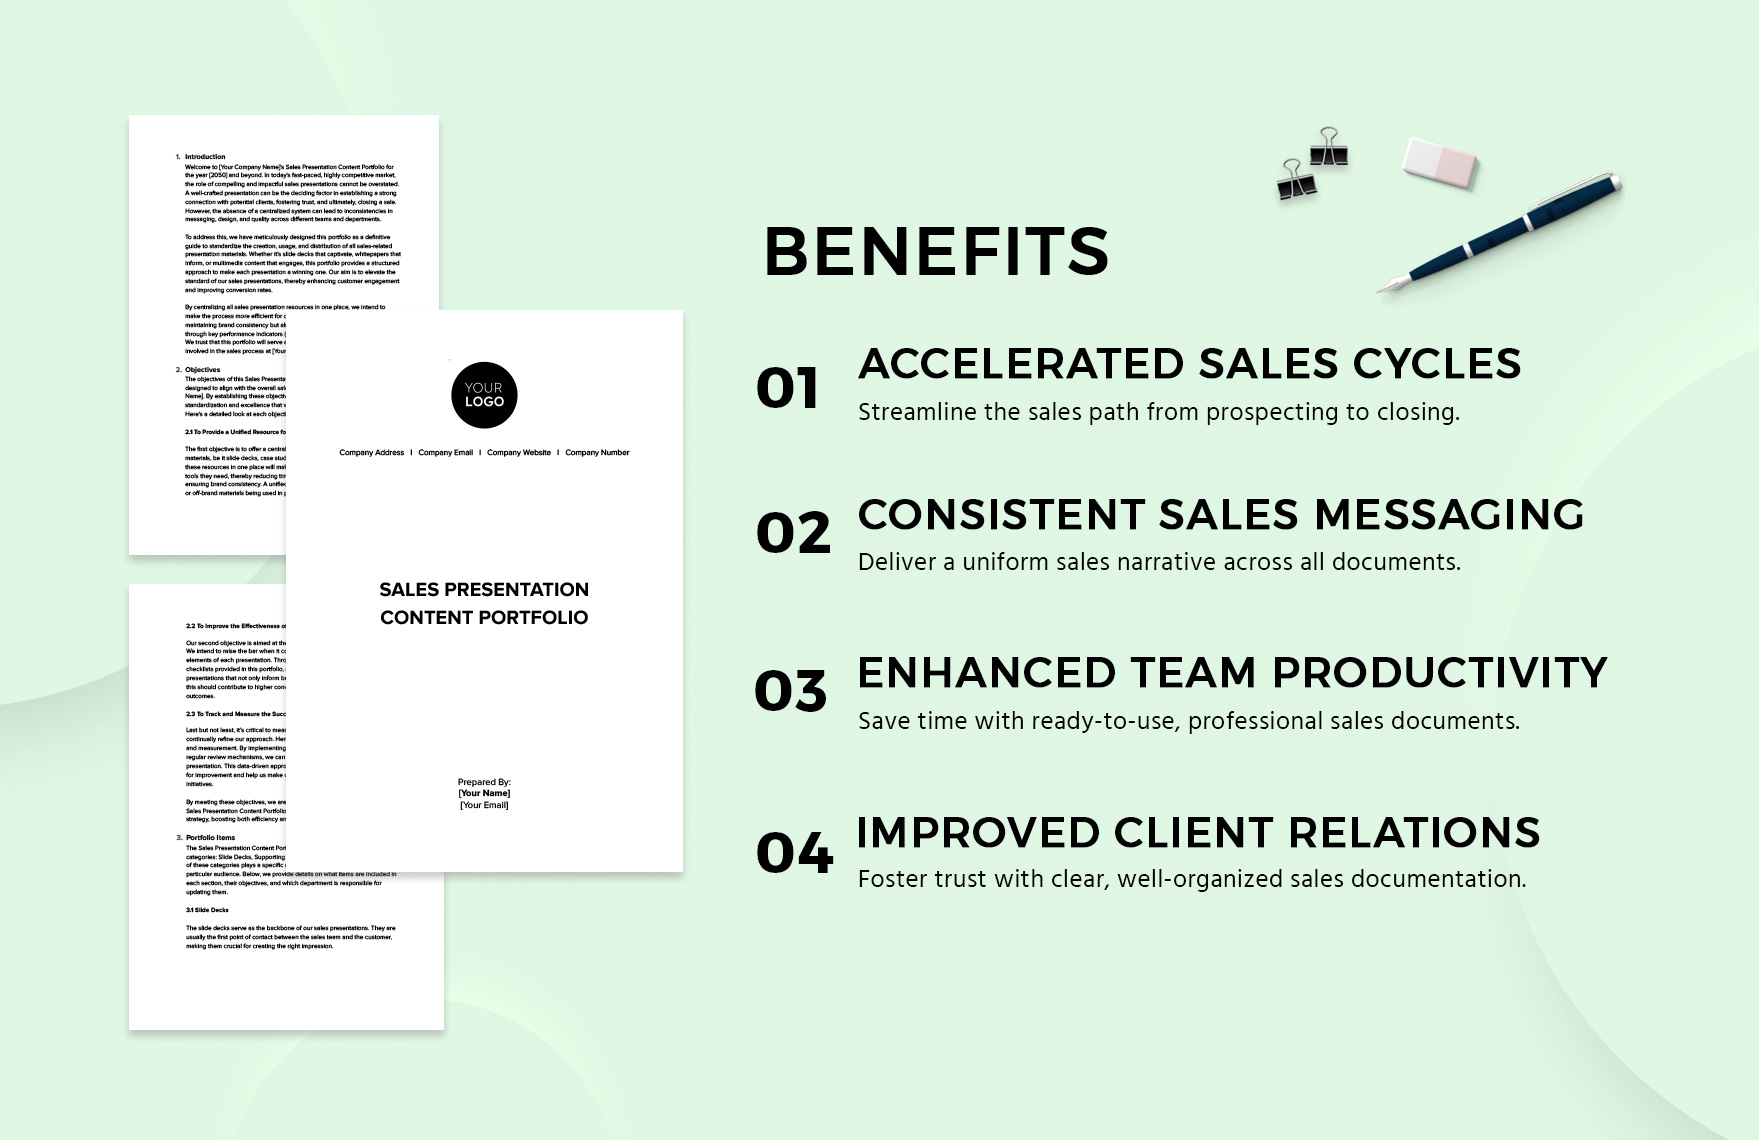 Sales Presentation Content Portfolio Template